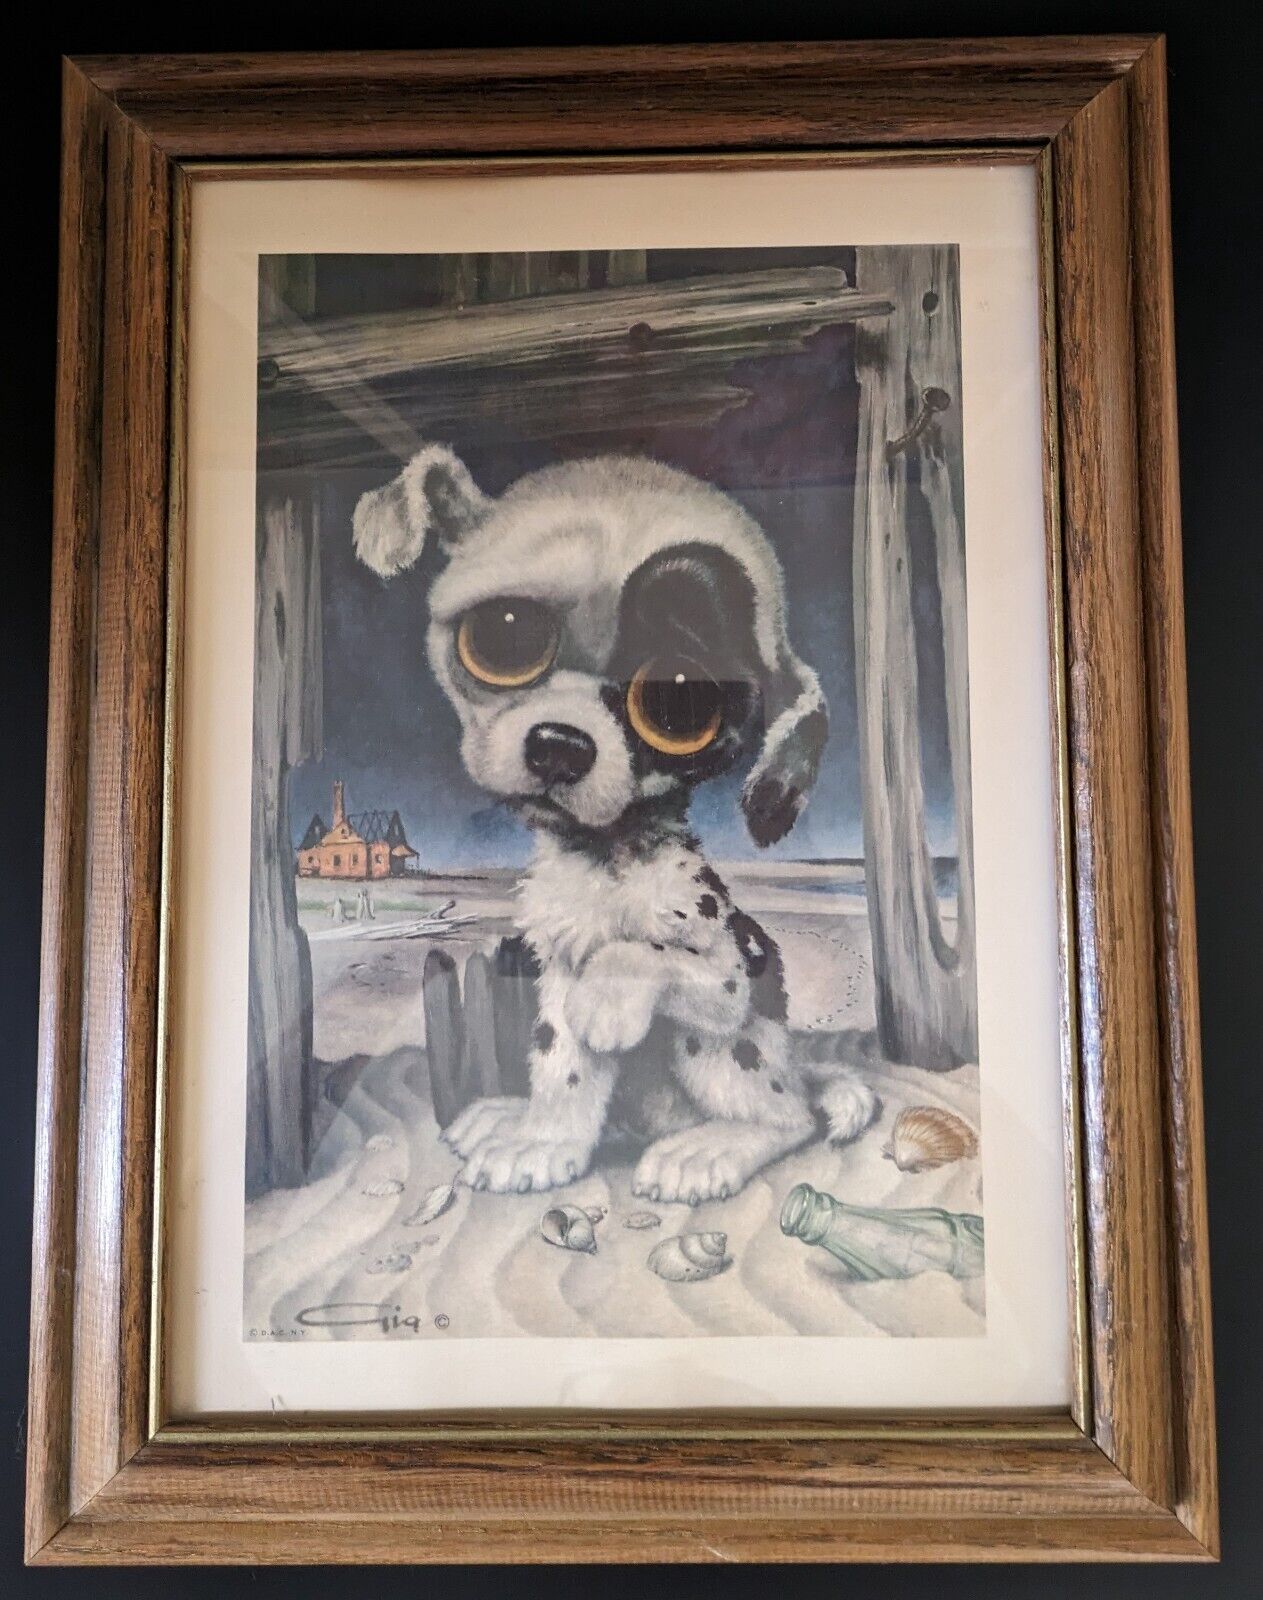 Vintage Framed Pity Puppy picture By Gig -  Sad Big Eyed Dog 